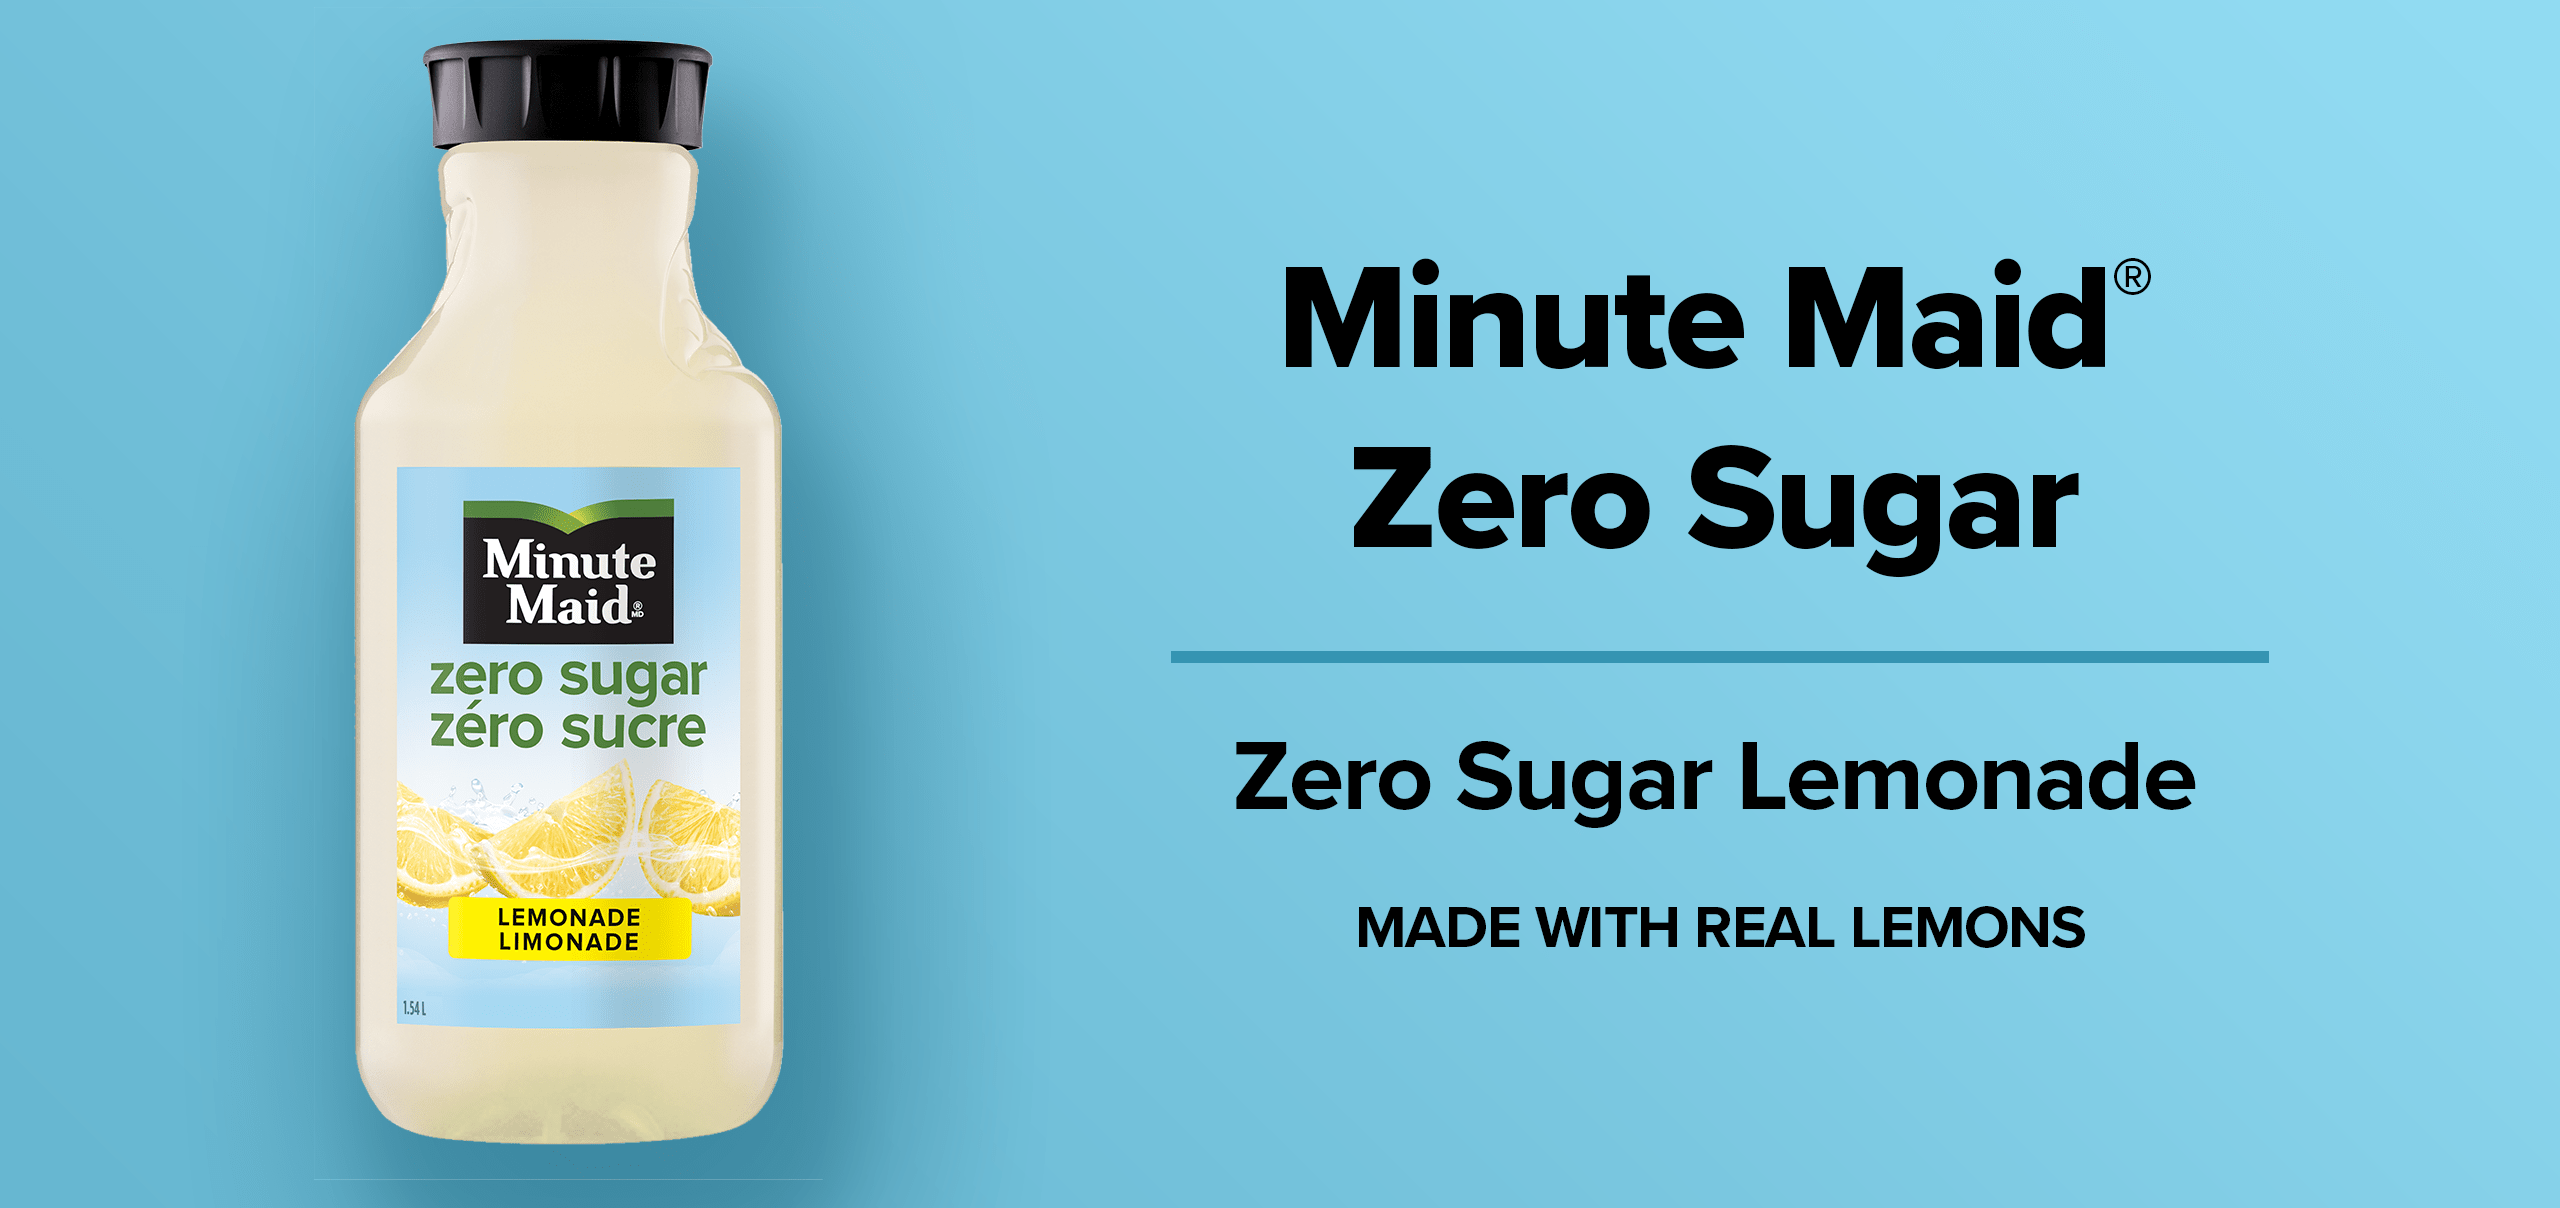 Minute Maid Zero Sugar. Zero Sugar LEMONADE. Made with real lemons.